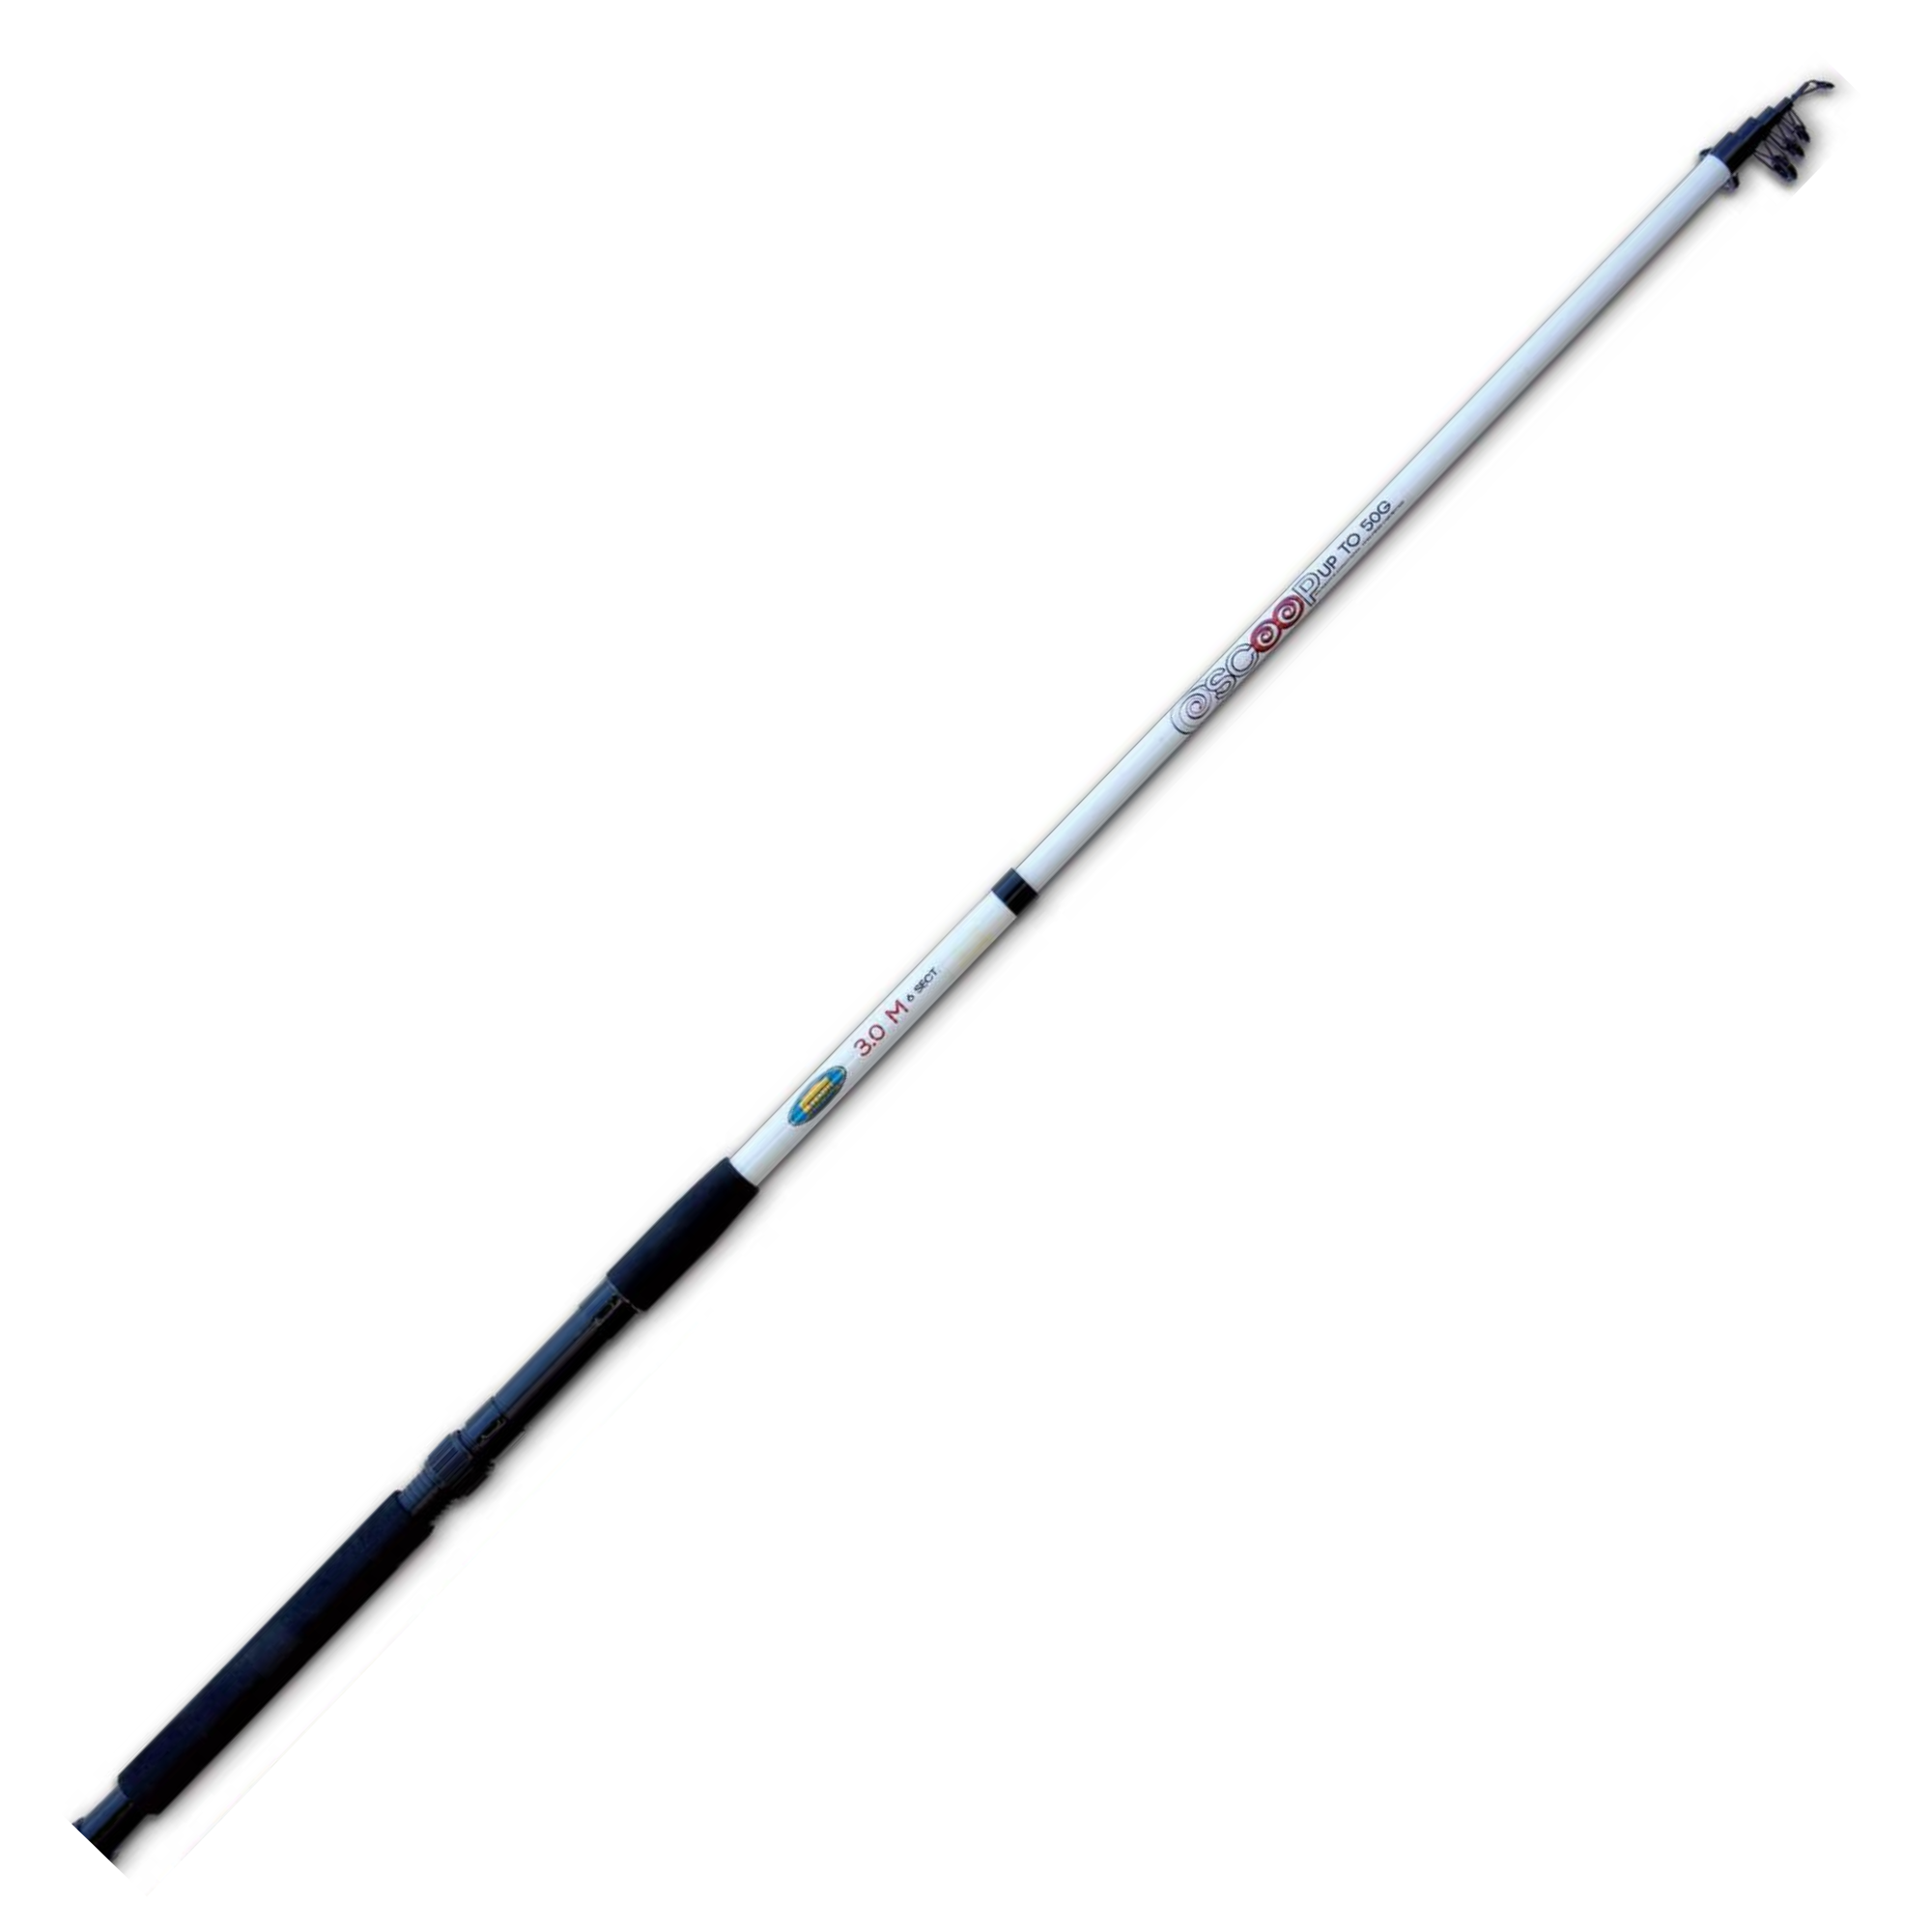 1.2m/1.5m Fiberglass Fishing rod with reel